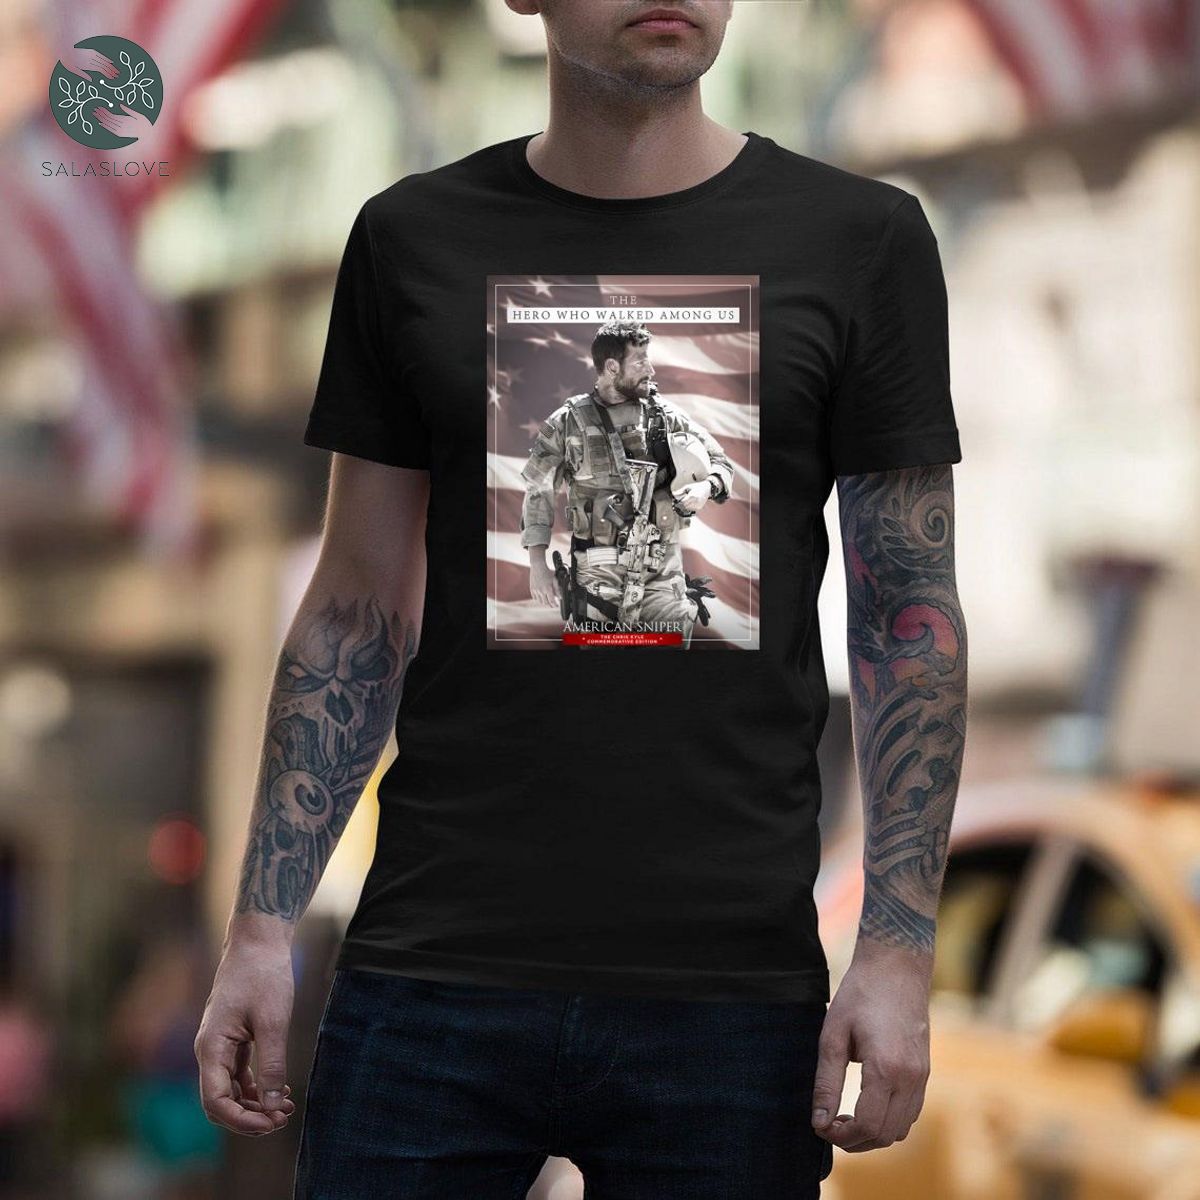 American Sniper Photos Shows Bradley Cooper For War T-shirt